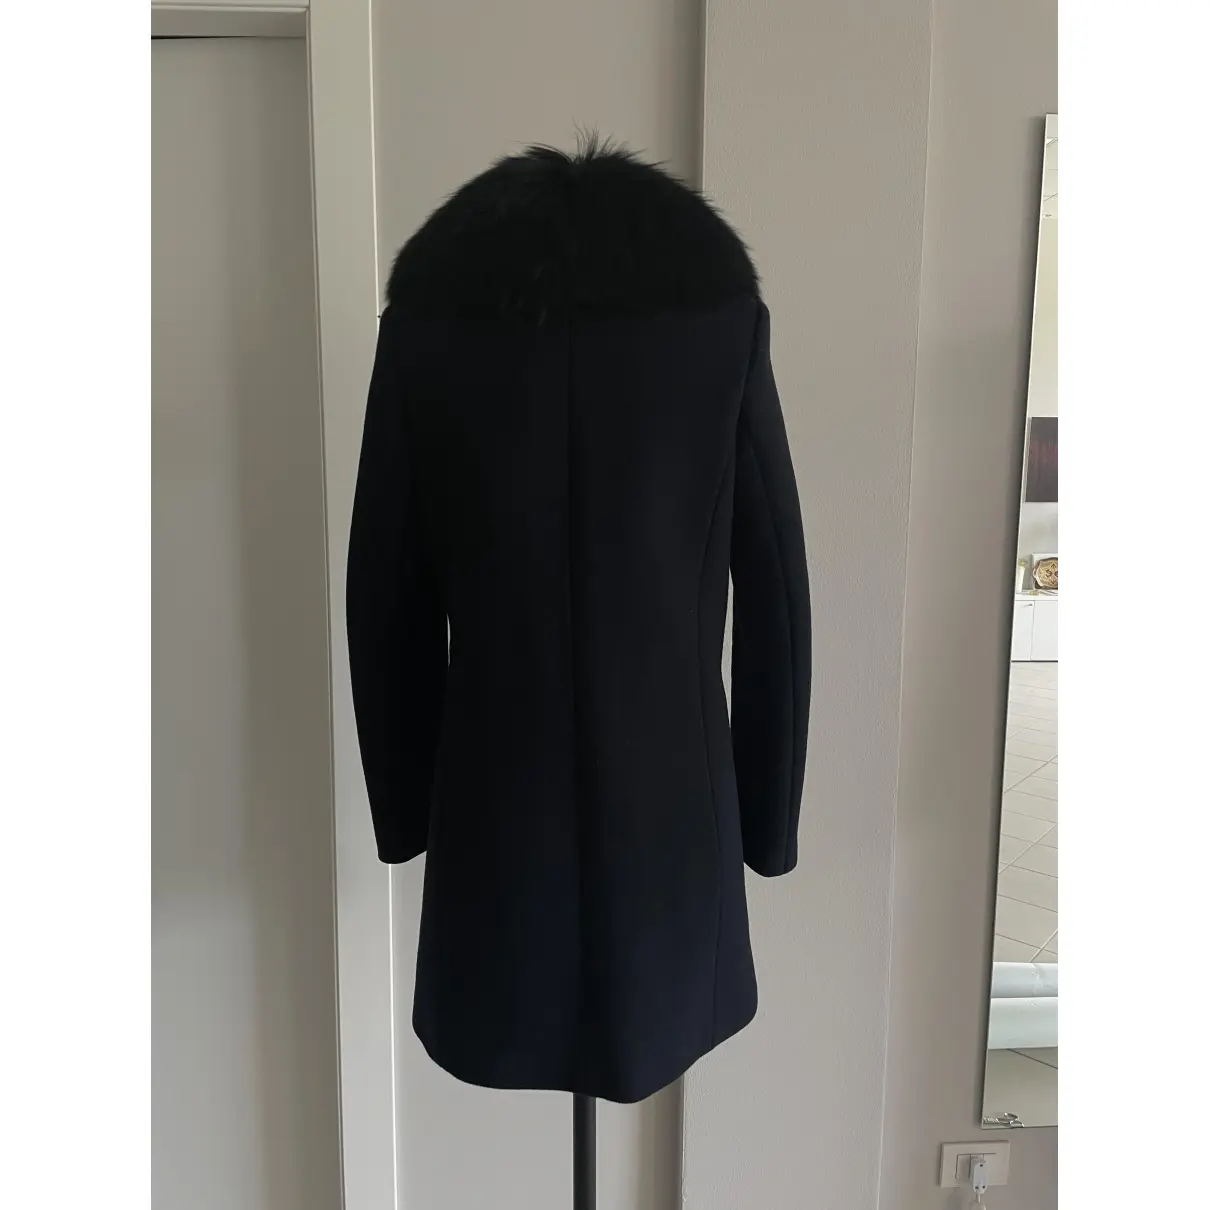 Buy Claudie Pierlot Fall Winter 2020 wool coat online